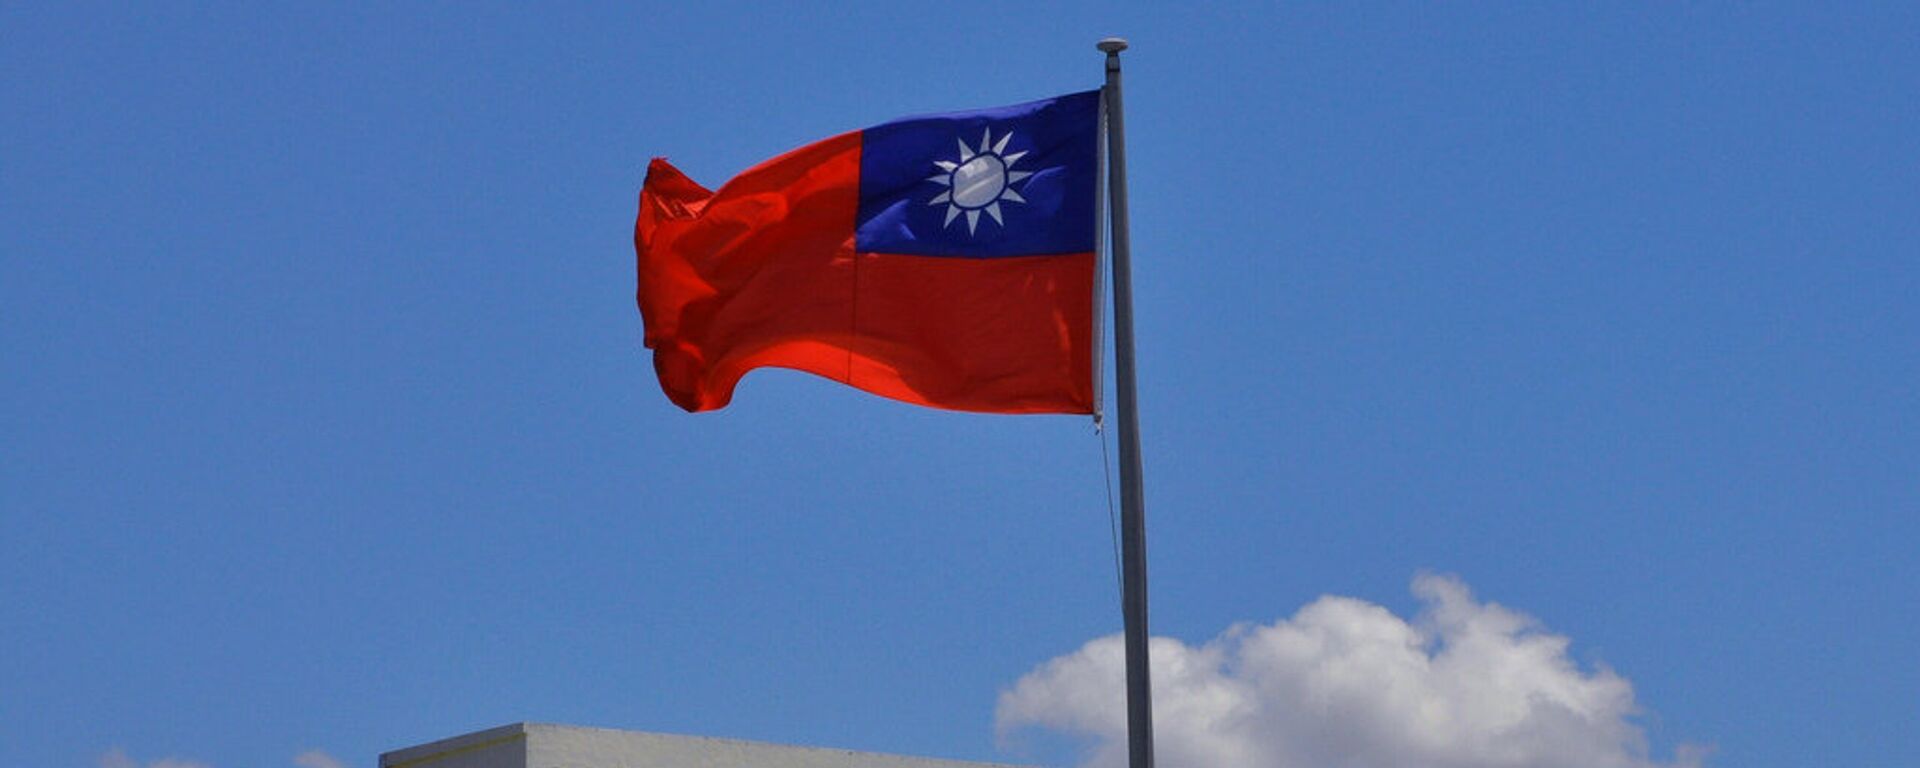 台湾の国旗 - Sputnik 日本, 1920, 18.05.2022